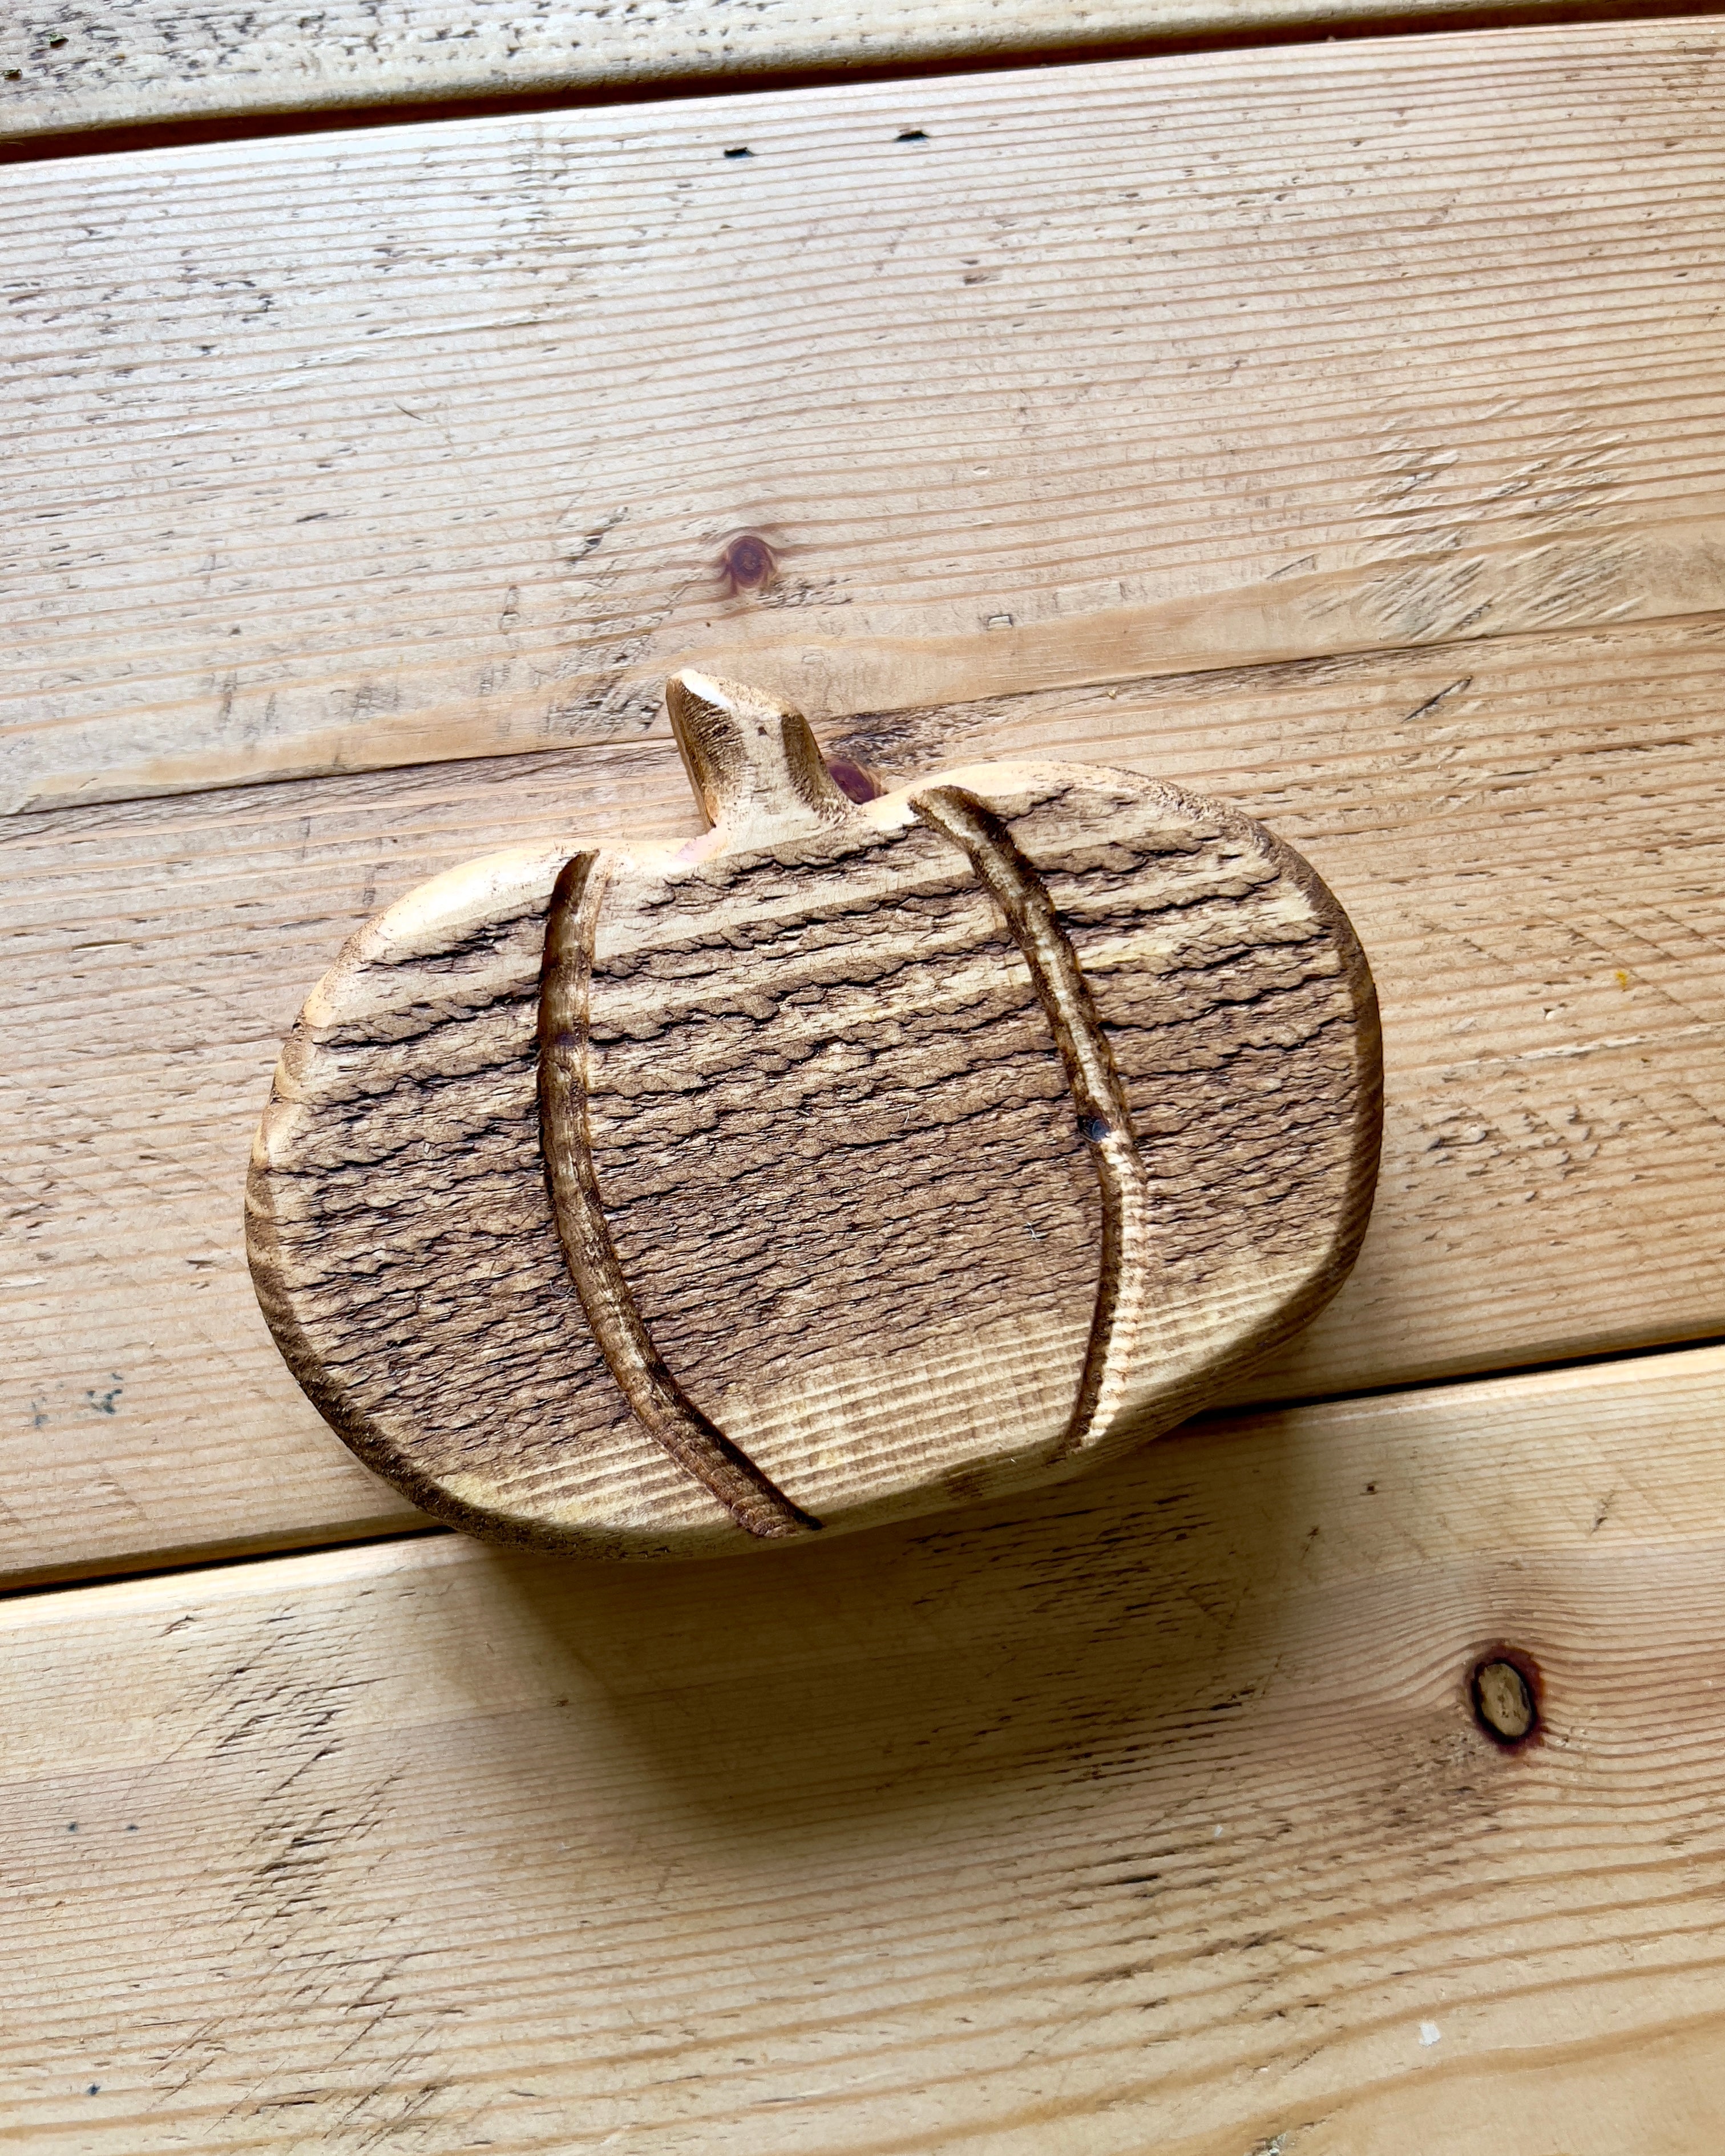 Wooden Pumpkin - Medium Oak